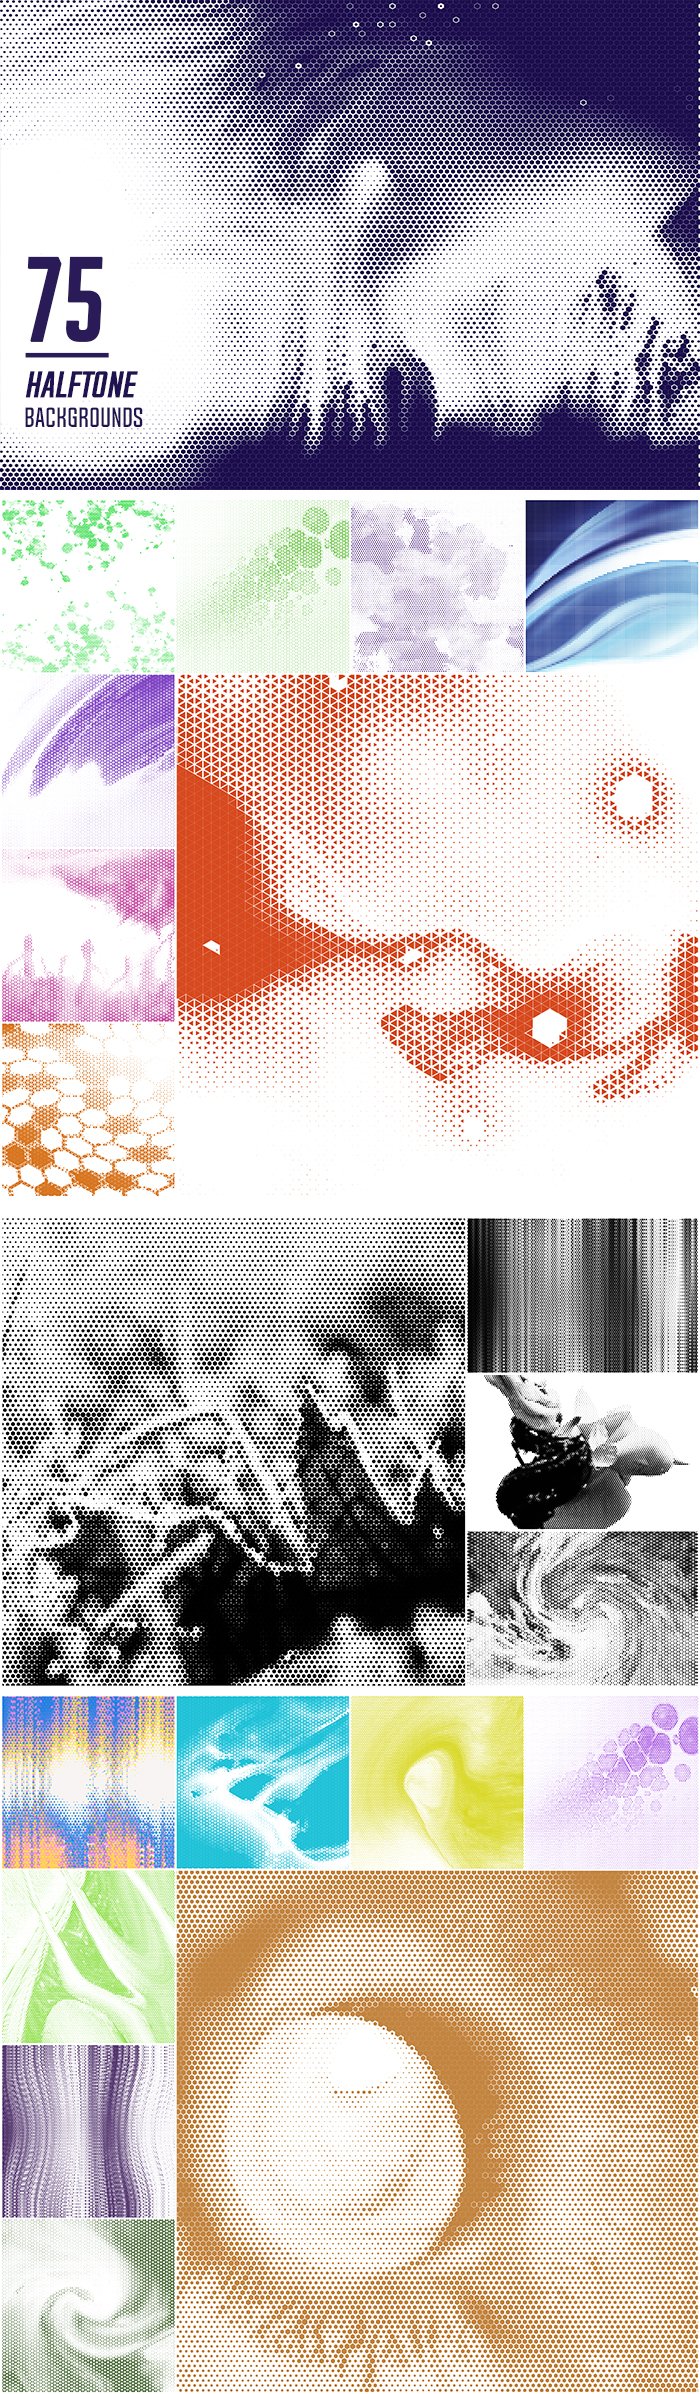 hi res half tone backgrounds collage